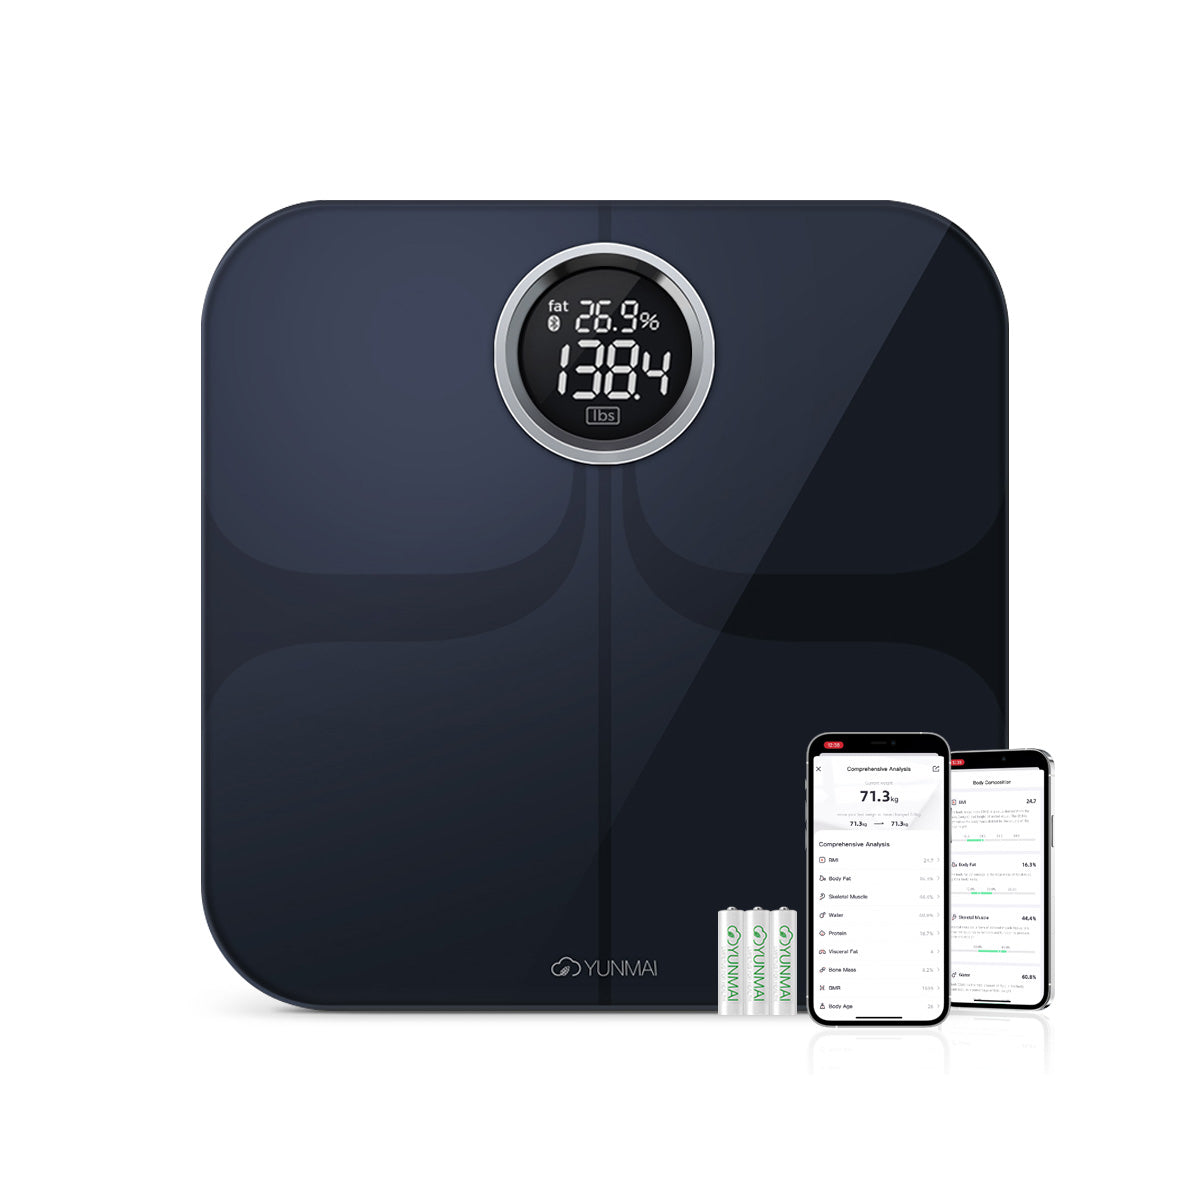 Buy Yunmai Pro Bluetooth Smart Scale & Body Analyzer at ShopLC.